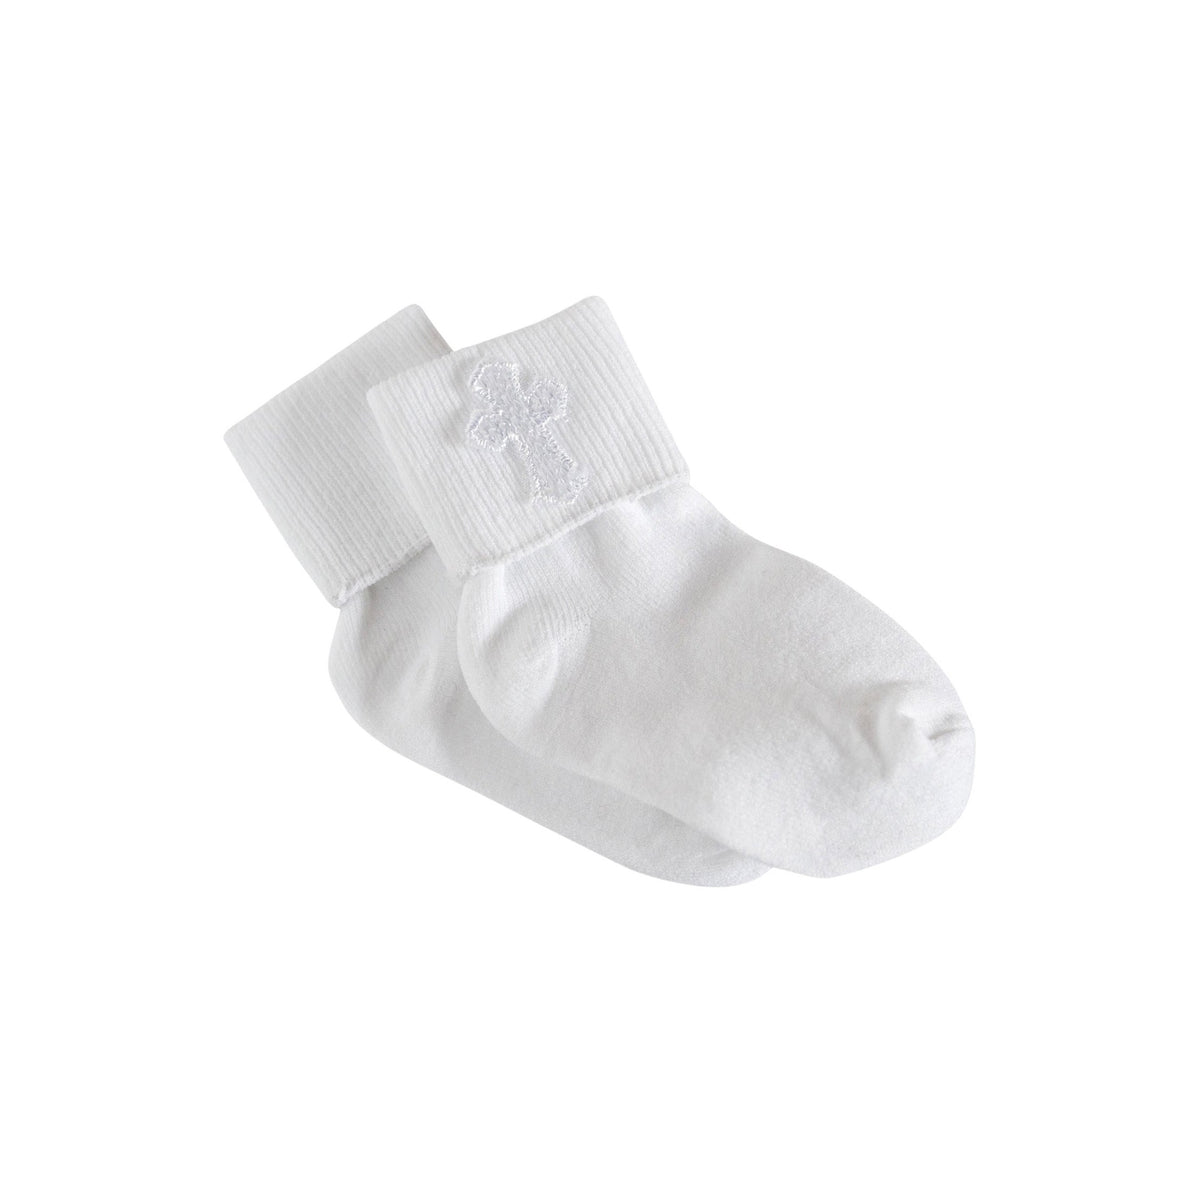 White Baby Christening Socks with Cross